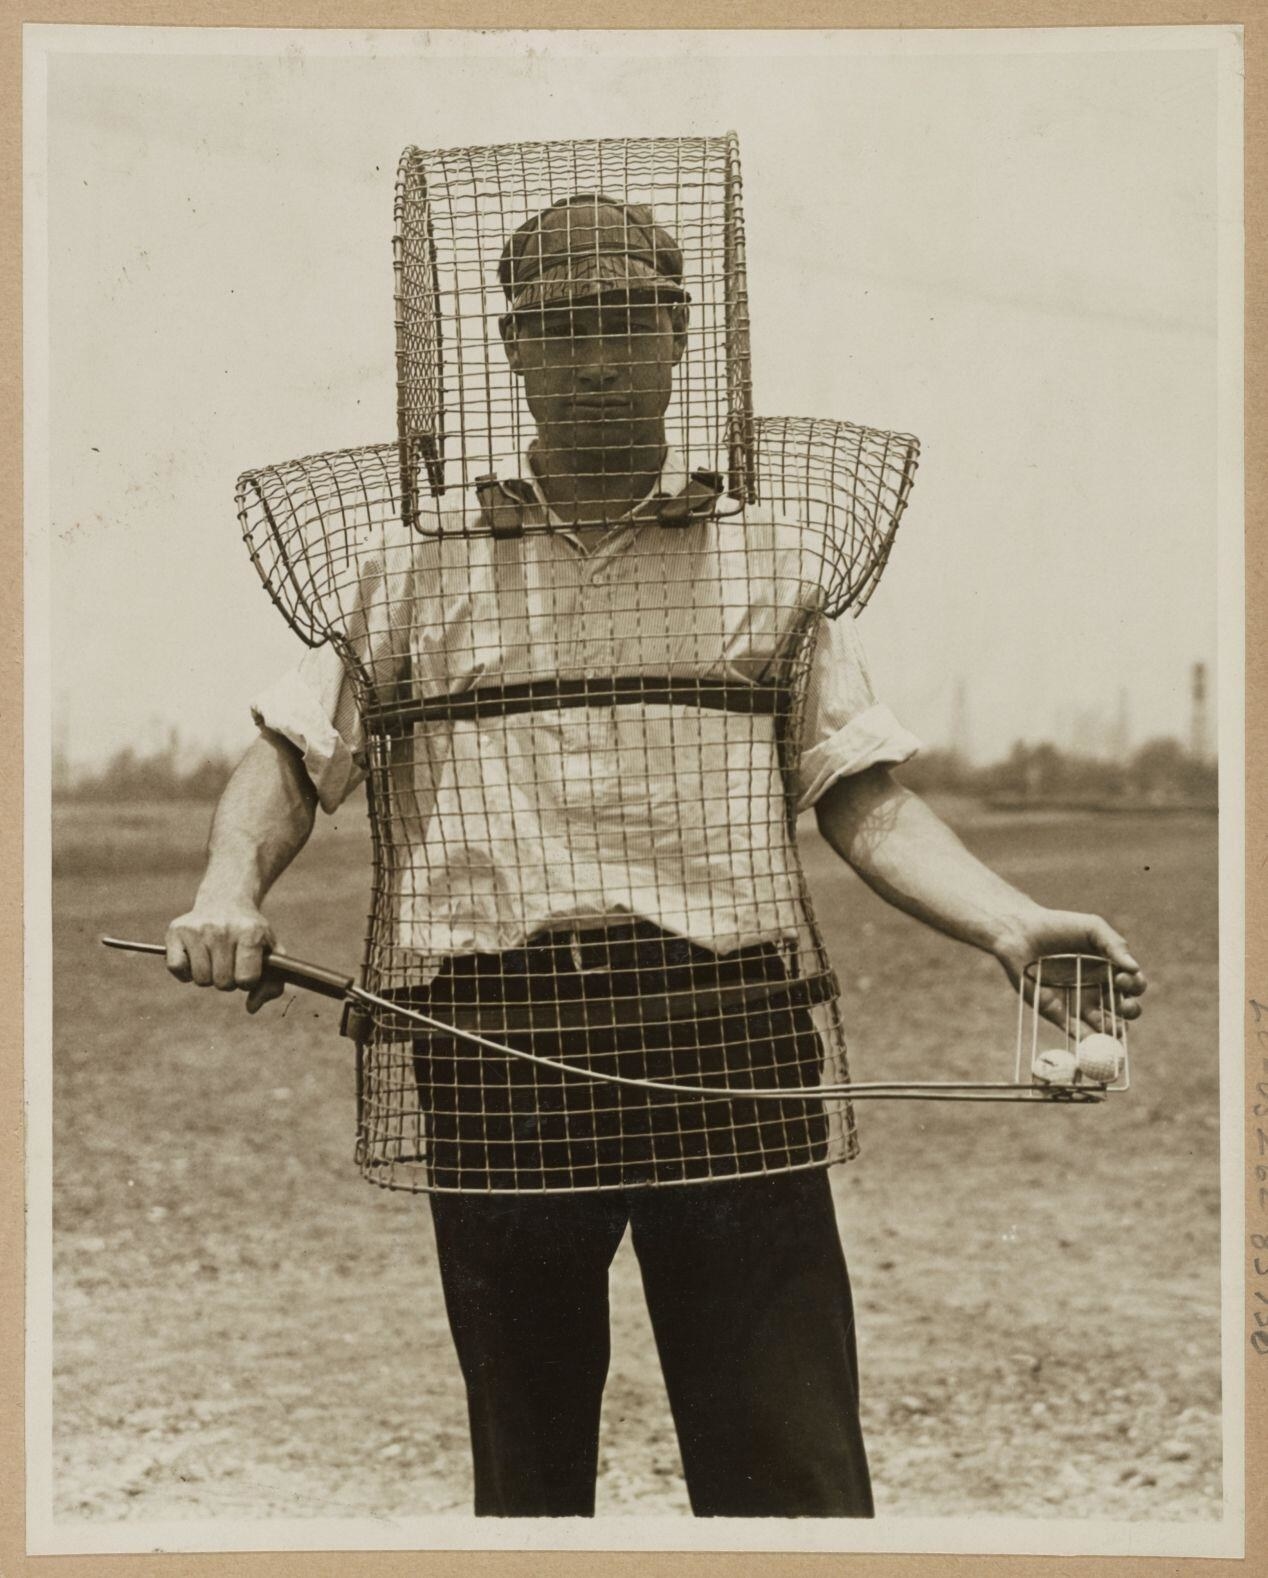 A man wearing armor while retrieving golf balls